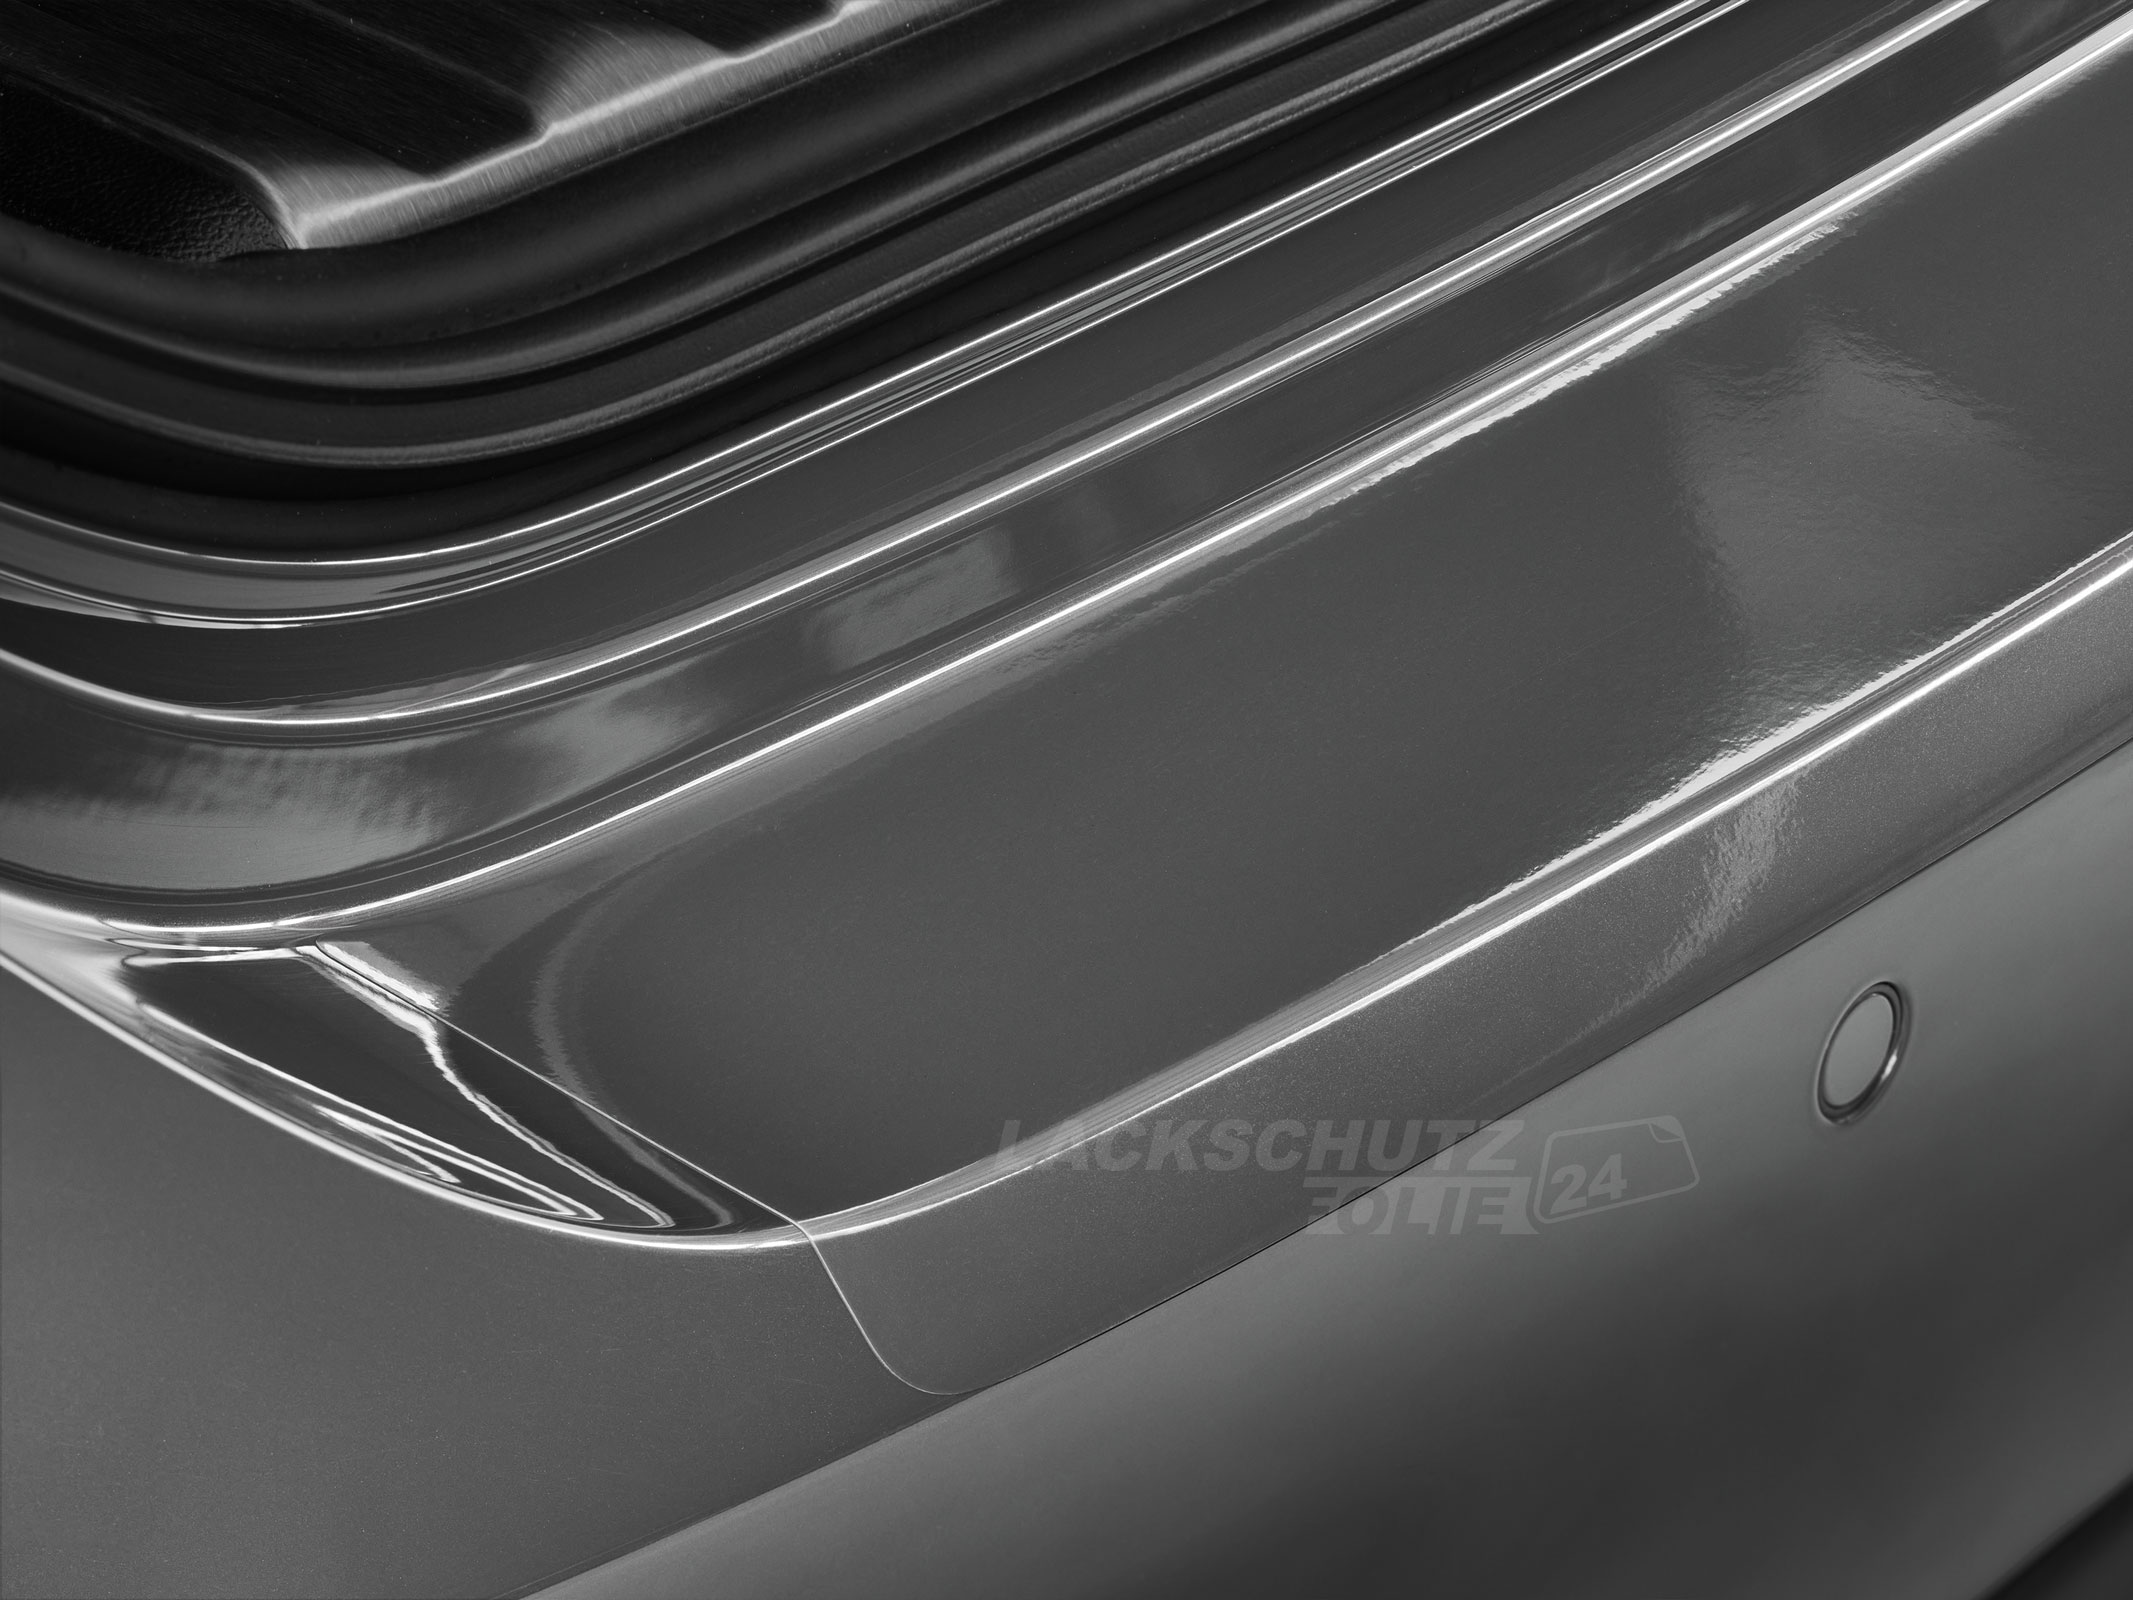 Ladekantenschutzfolie - Transparent Glatt Hochglänzend 240 µm stark für Opel Meriva  Typ A, BJ 2003-2010